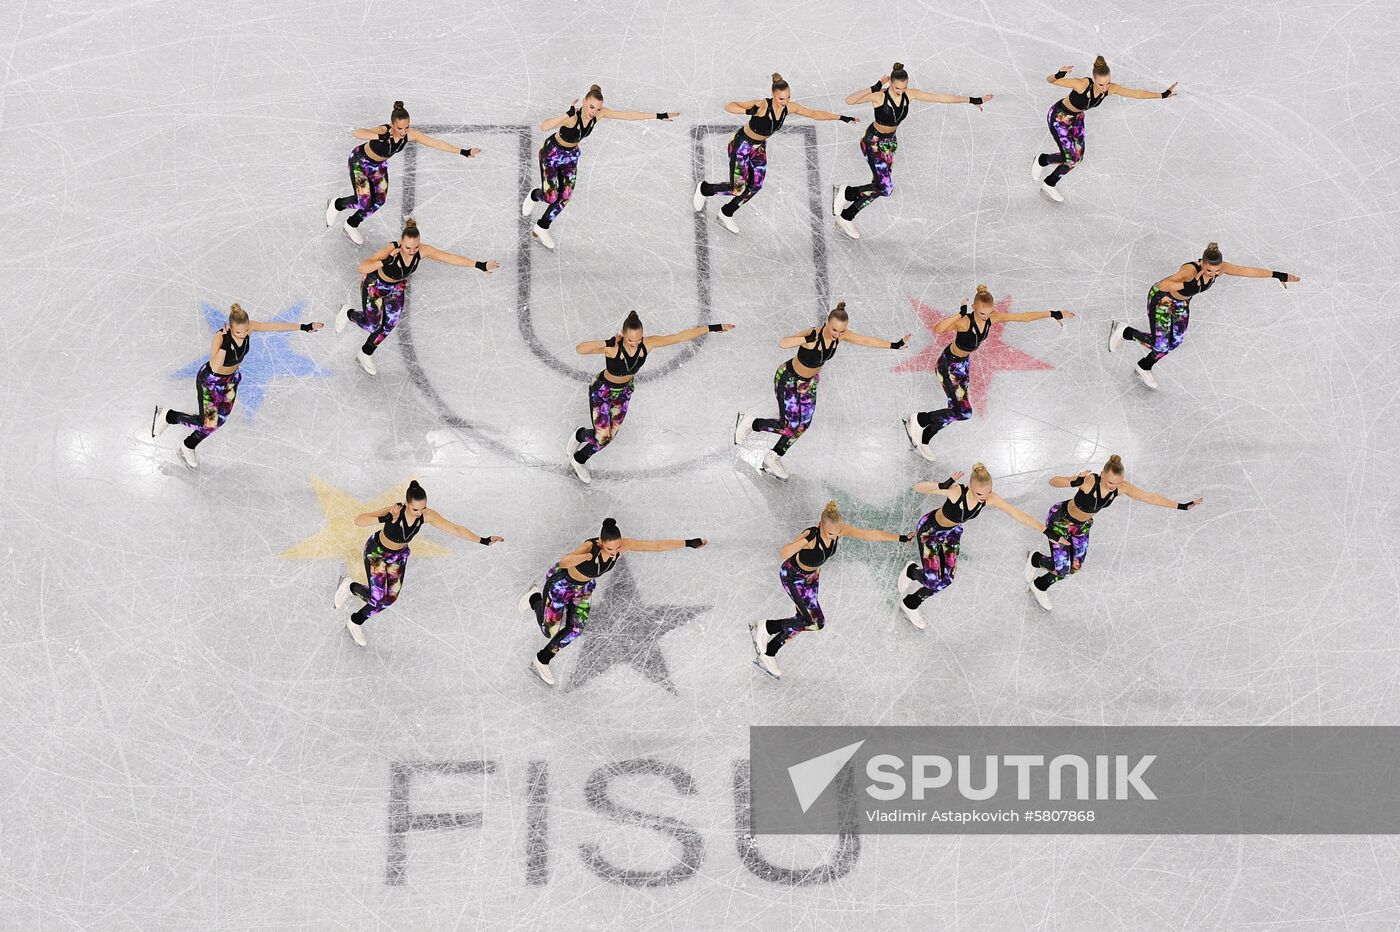 Russia Universiade Synchronized Figure Skating